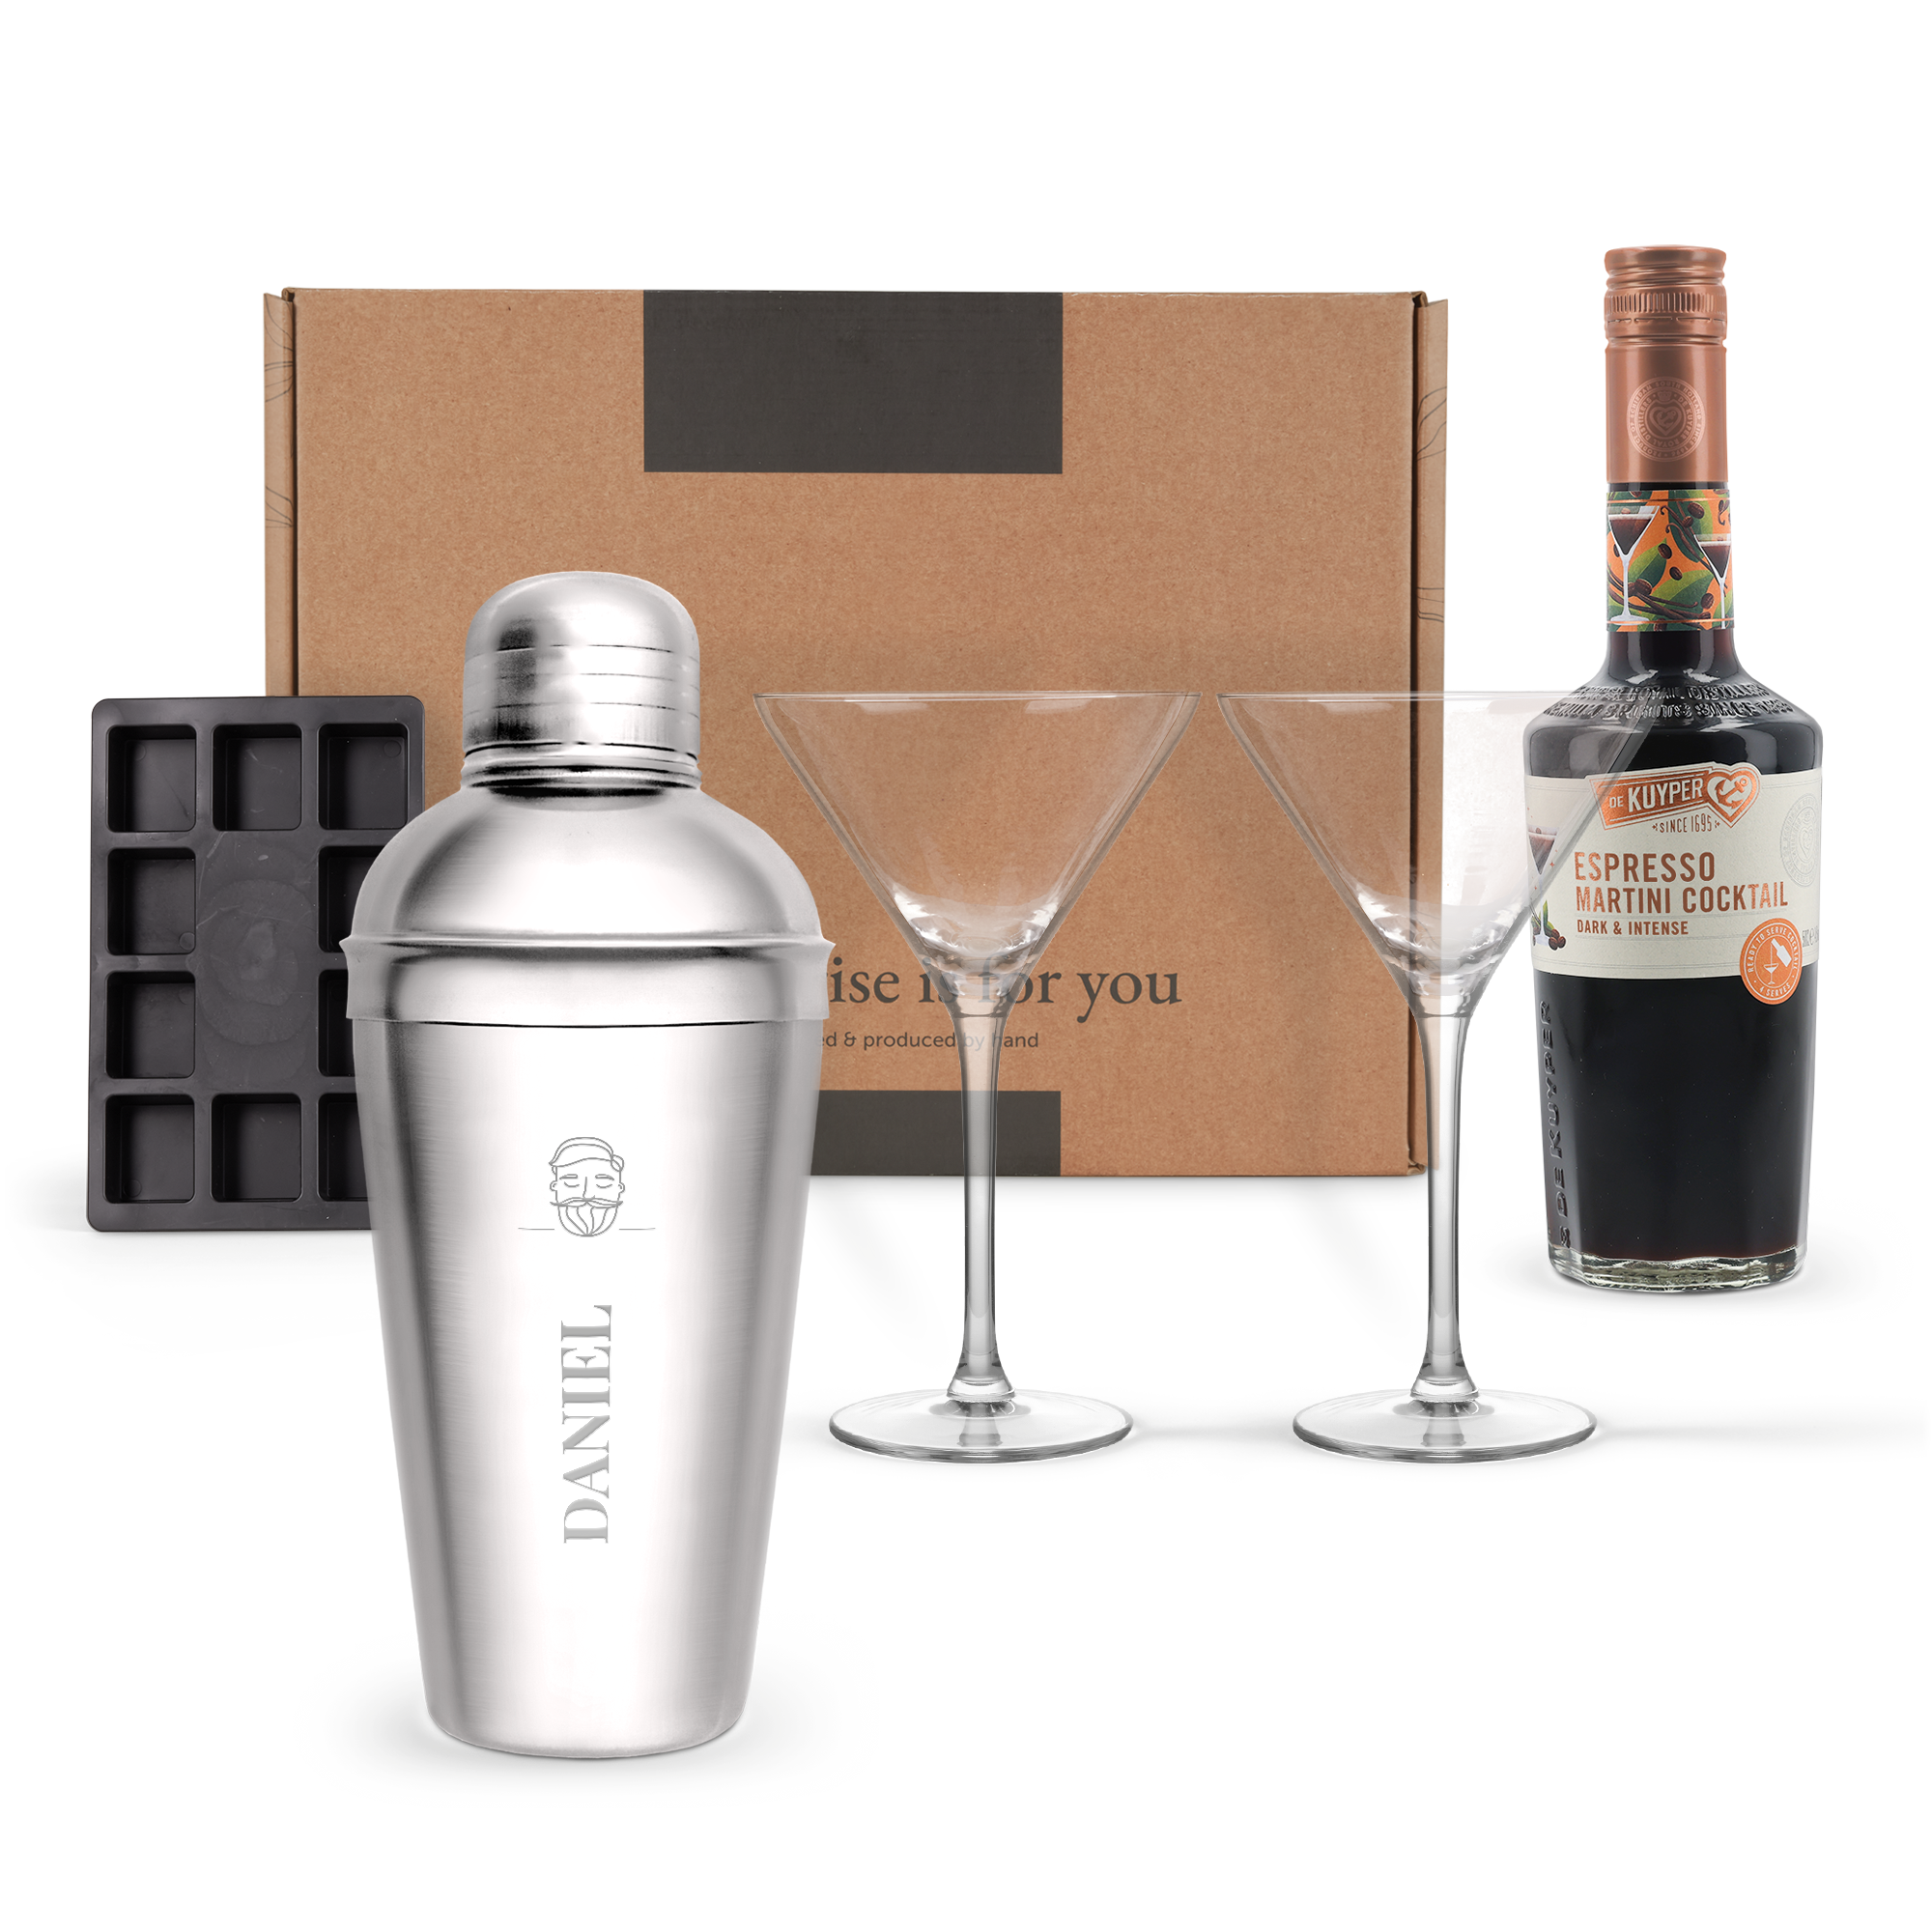 Personalised Espresso Martini gift set